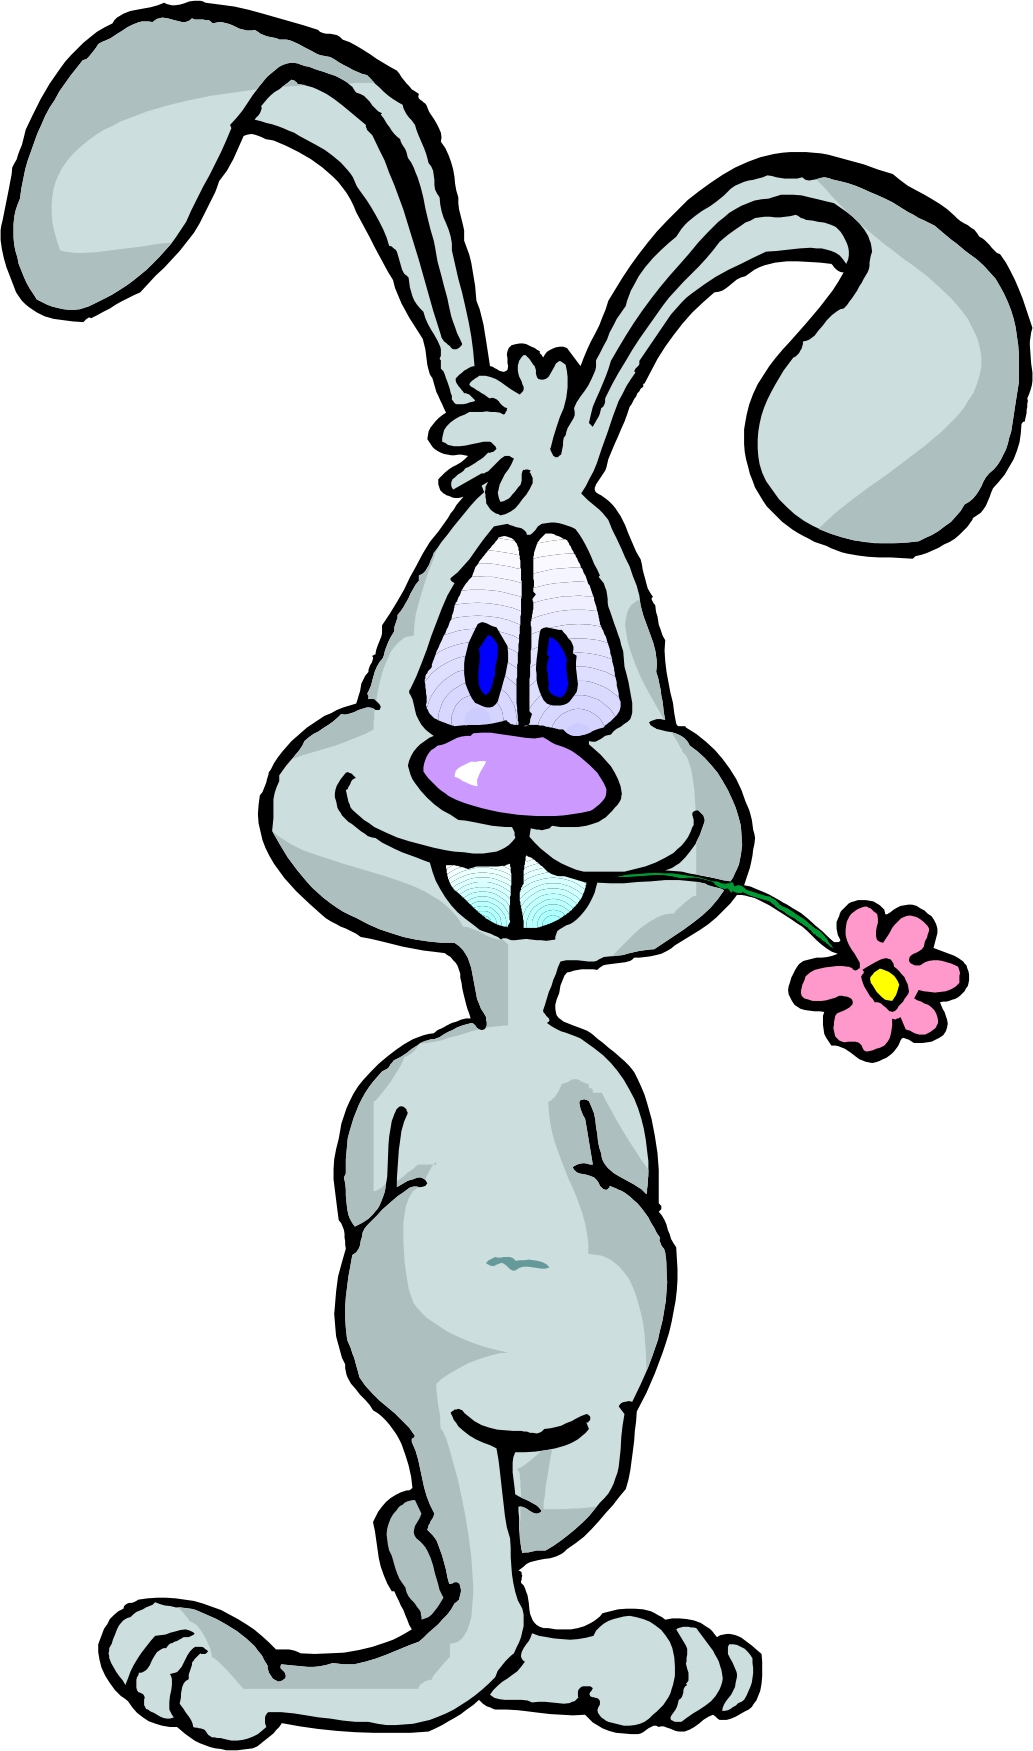 Images of Cartoon Bunny Rabbit - Jefney